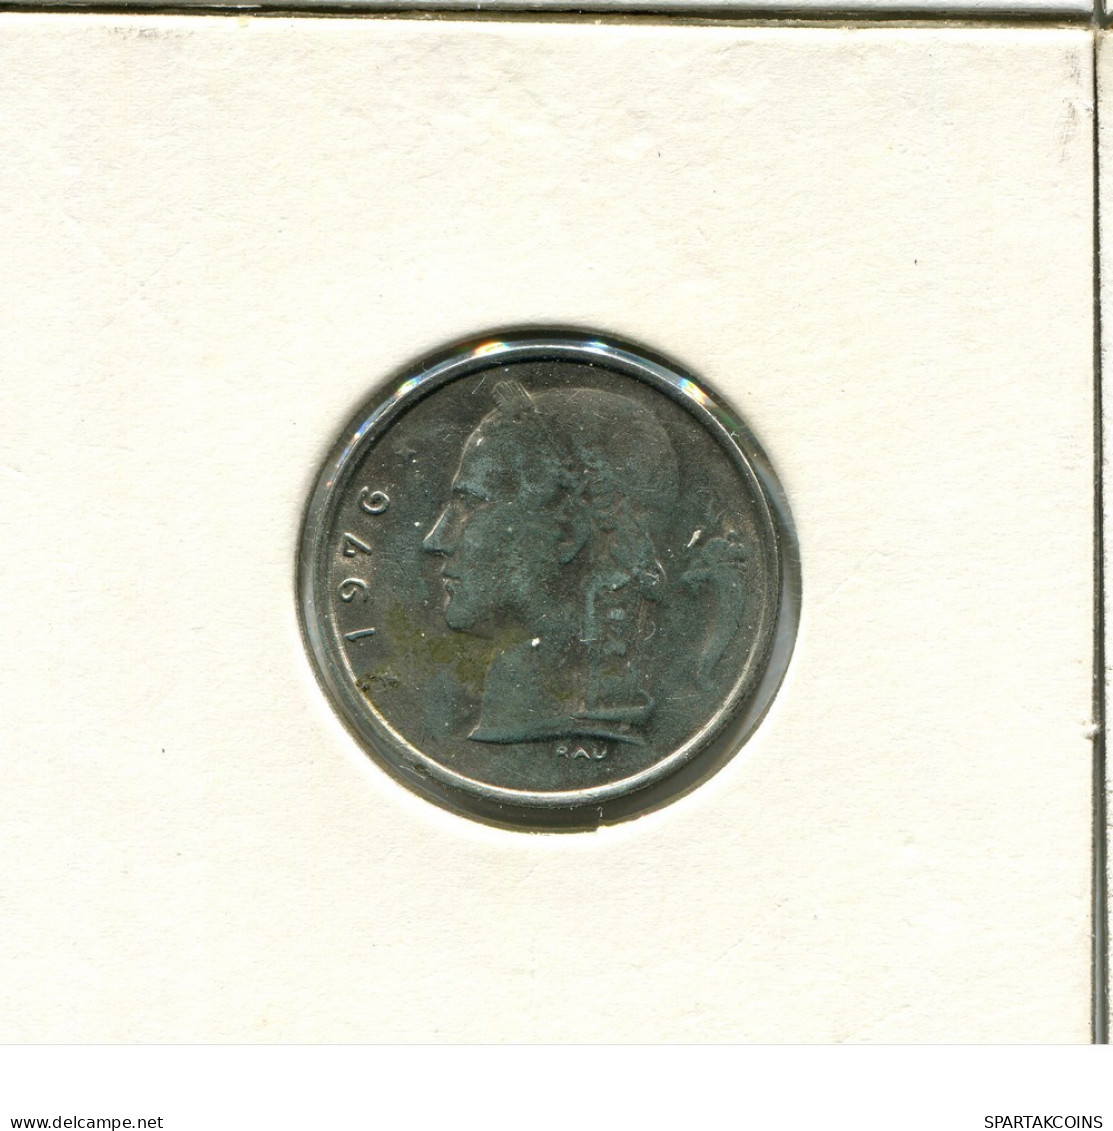 1 FRANC 1976 FRENCH Text BELGIUM Coin #AU036.U.A - 1 Franc